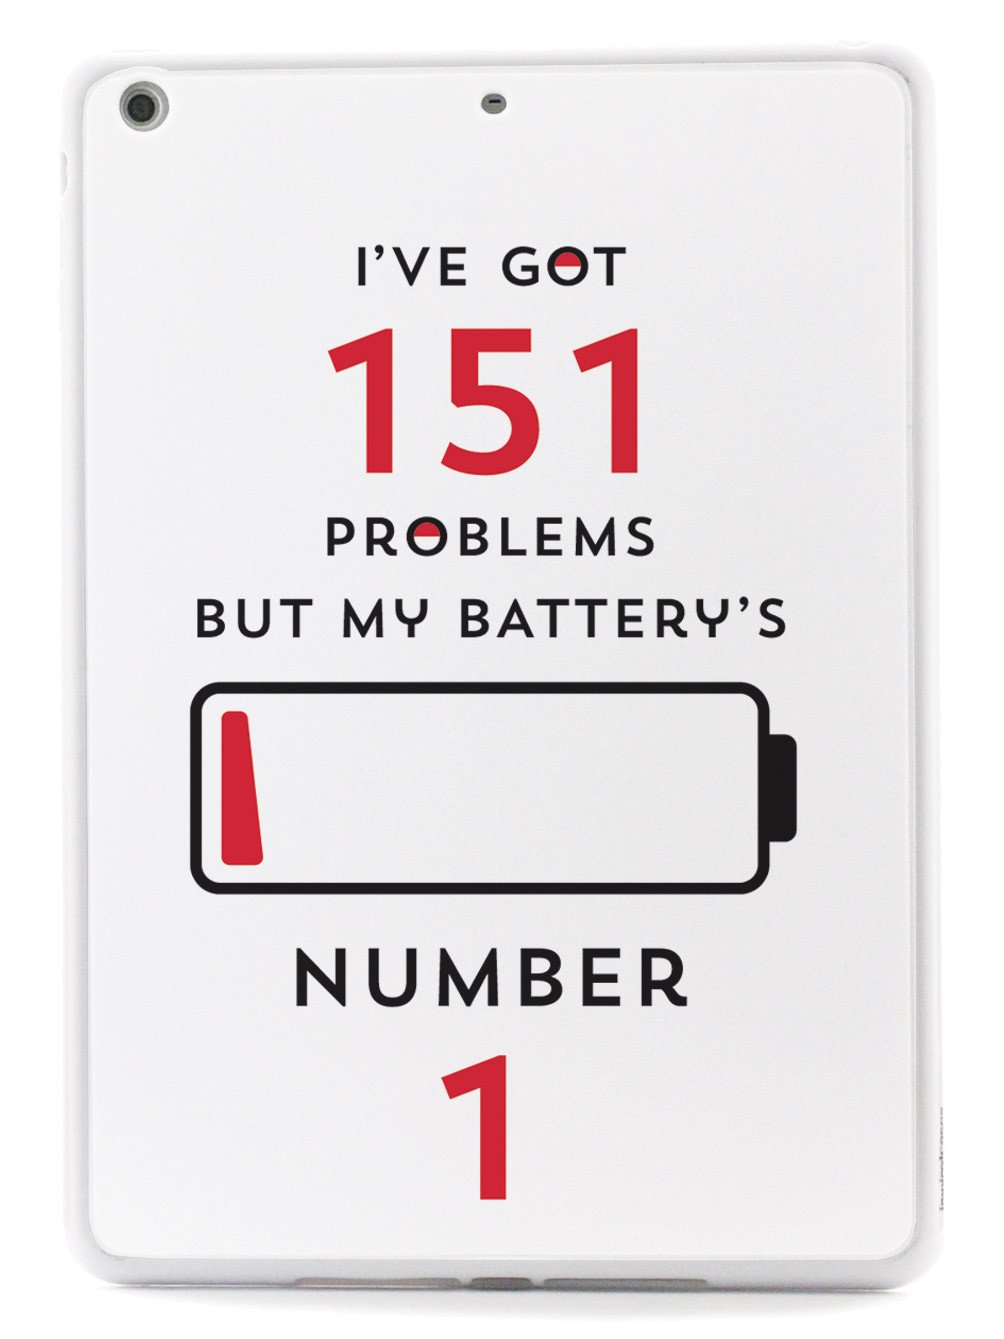 I've Got 151 Problems - White Case